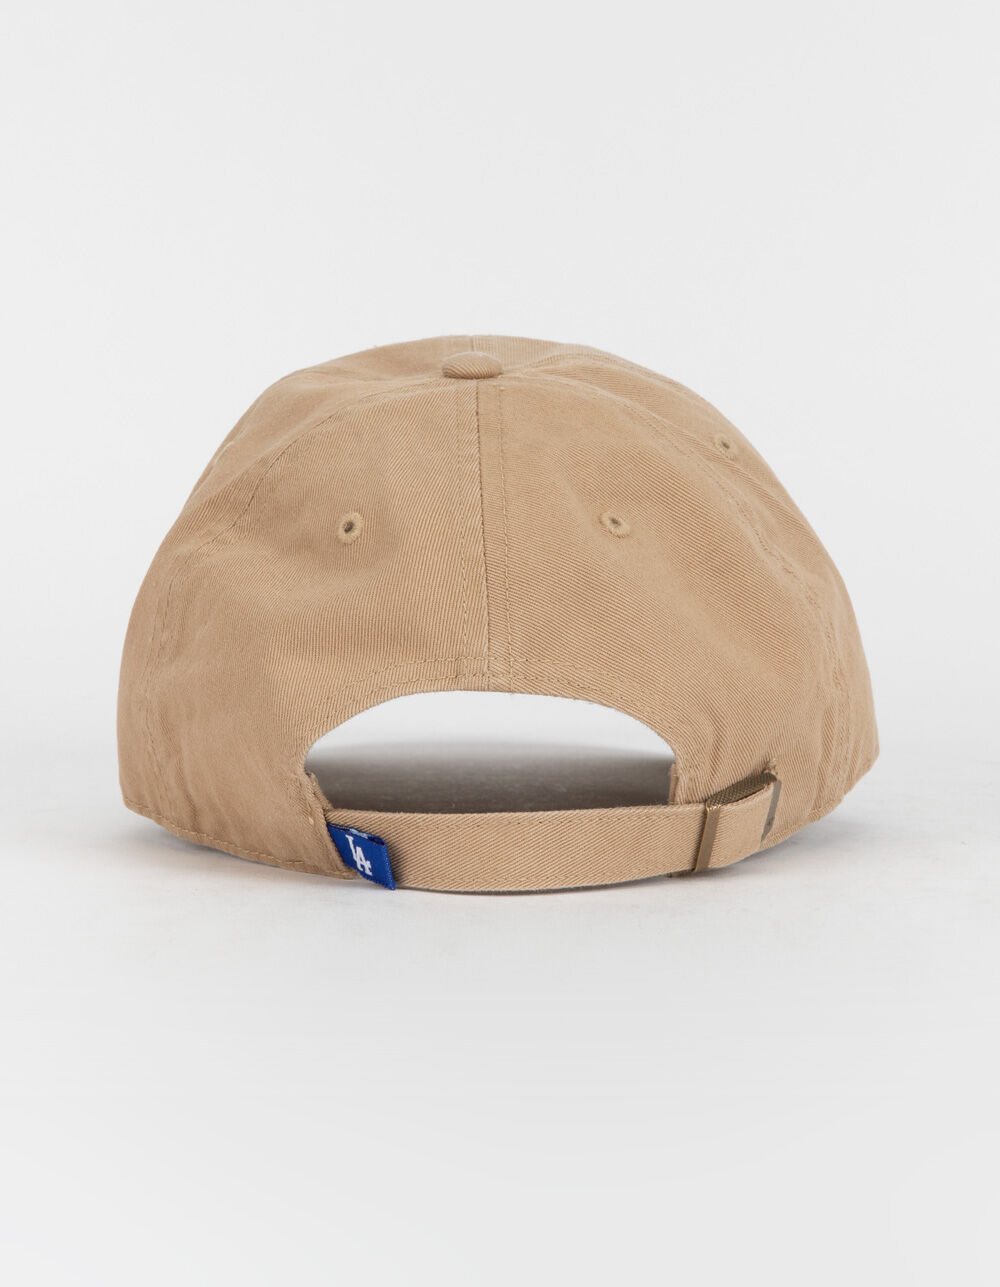 LA Dodgers Baseball Cap Hat 47 Brand Genuine Merchandise Blue Men Size M